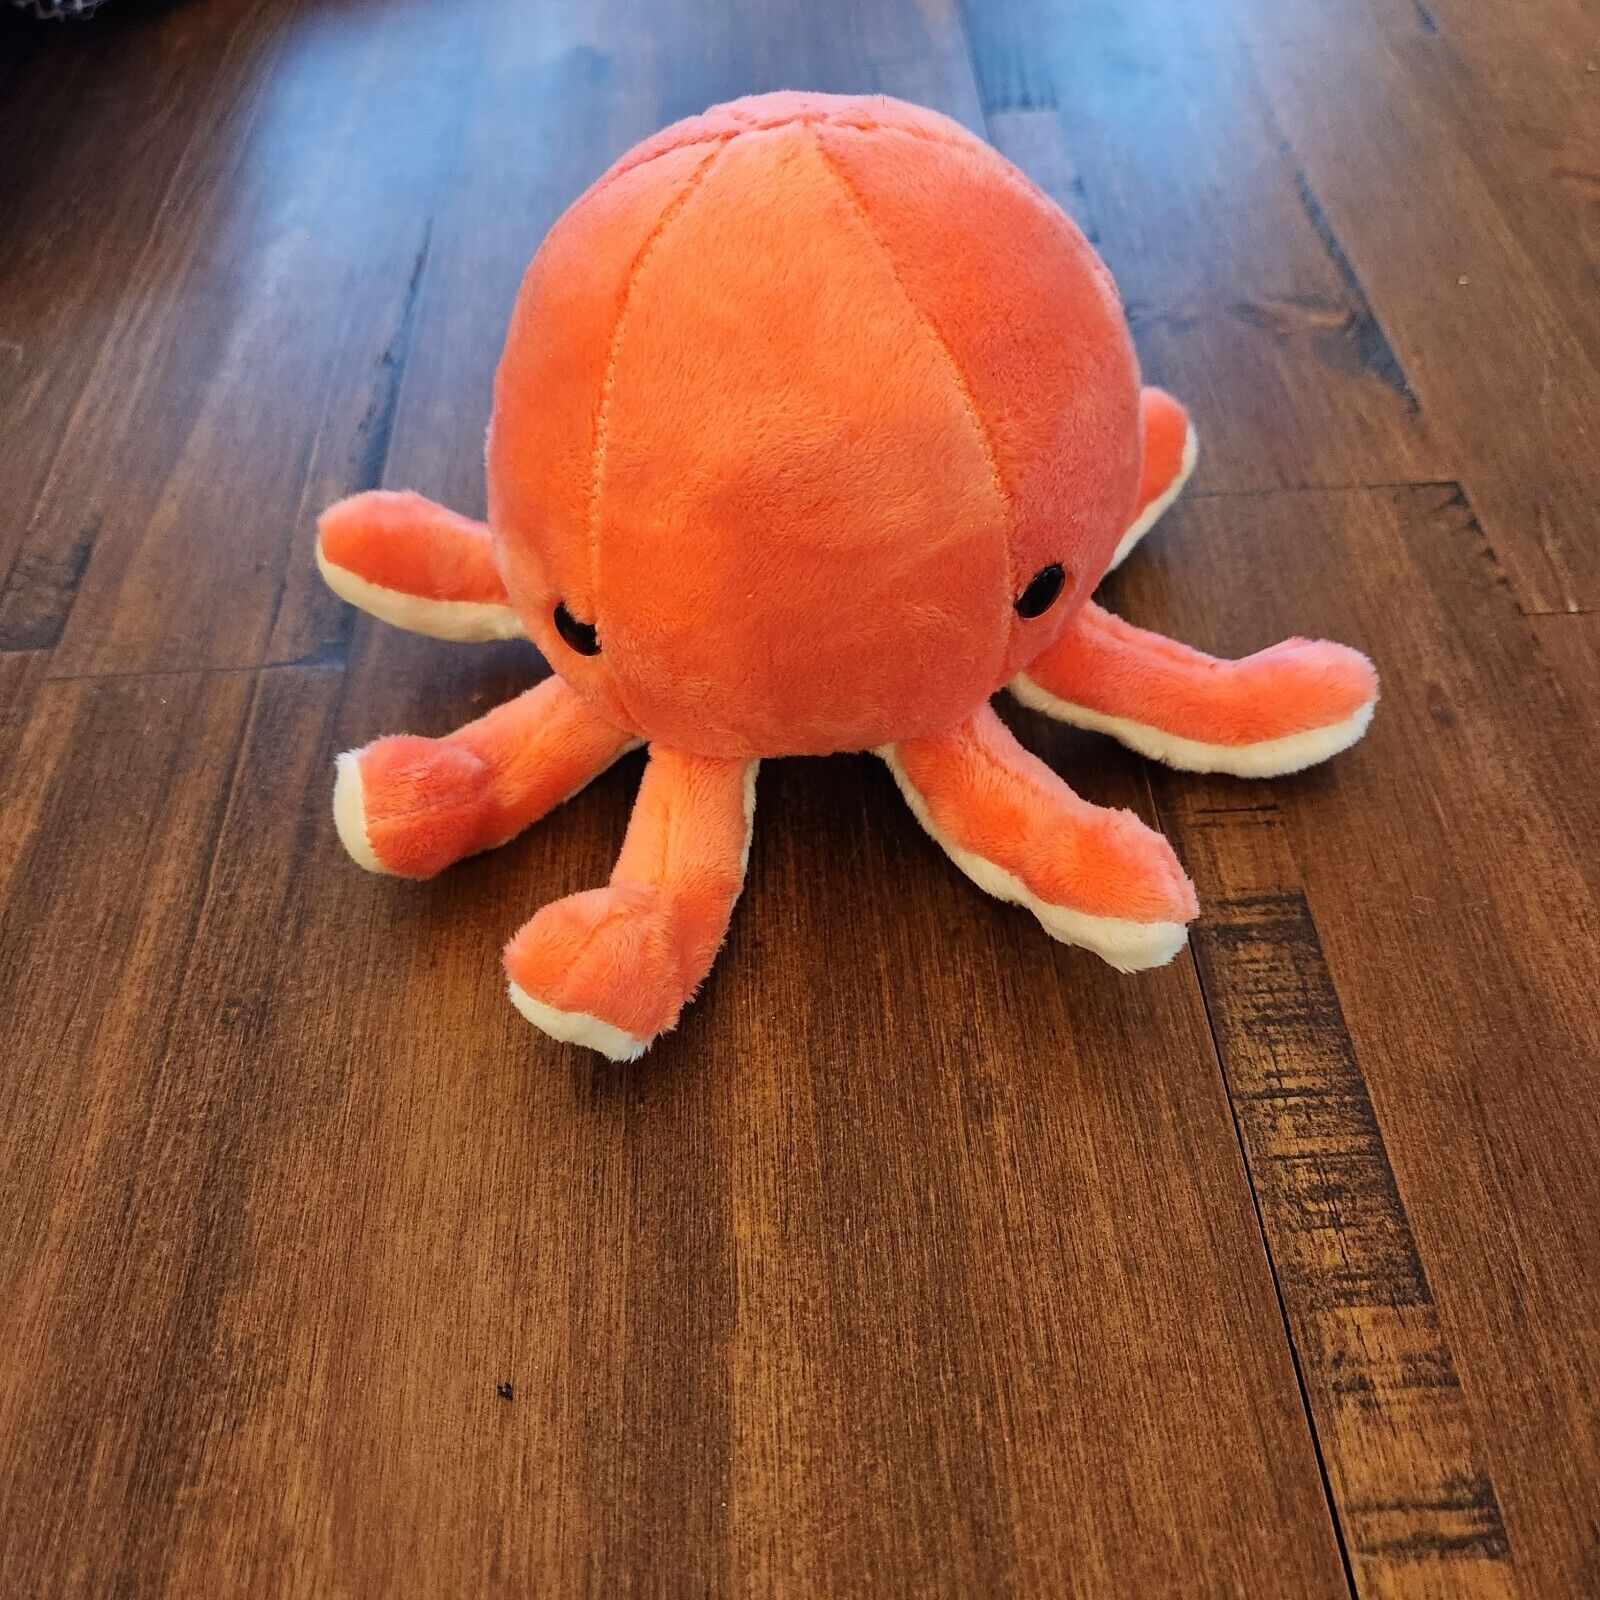 Bellzi - Octi the Octopus - 11" Plush Stuffed Animal | eBay